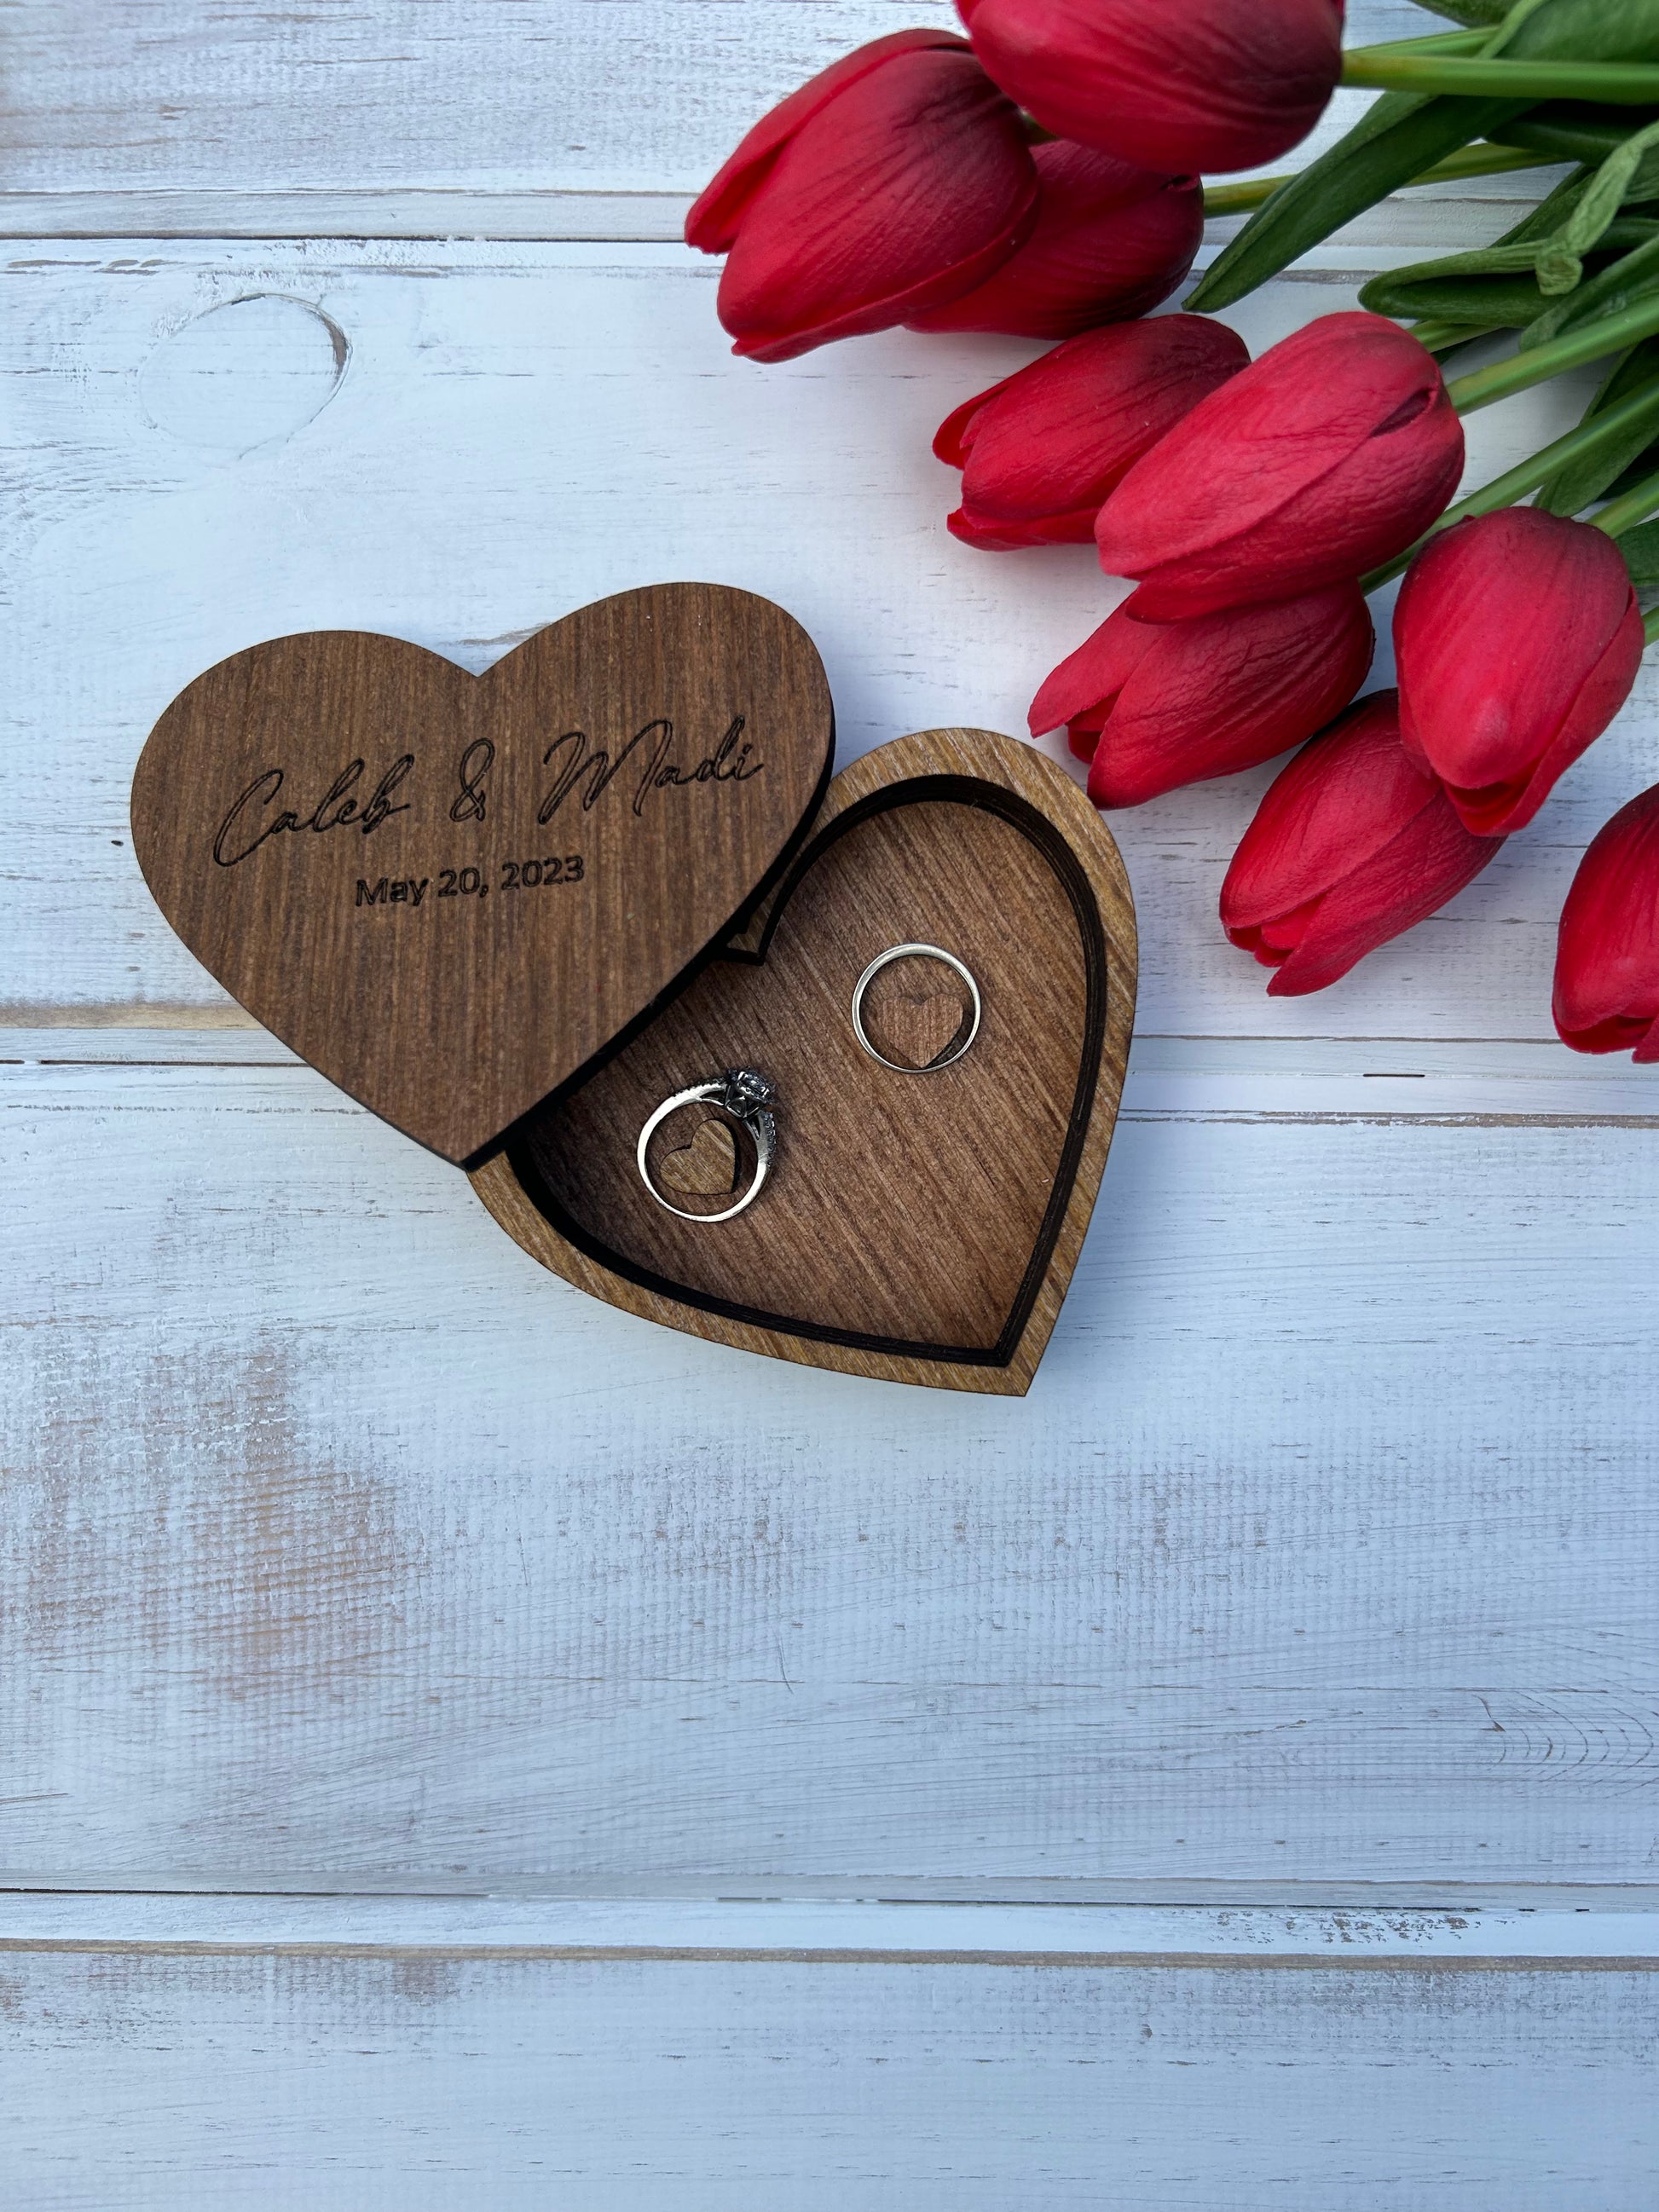 Heart shaped wood jewelry box